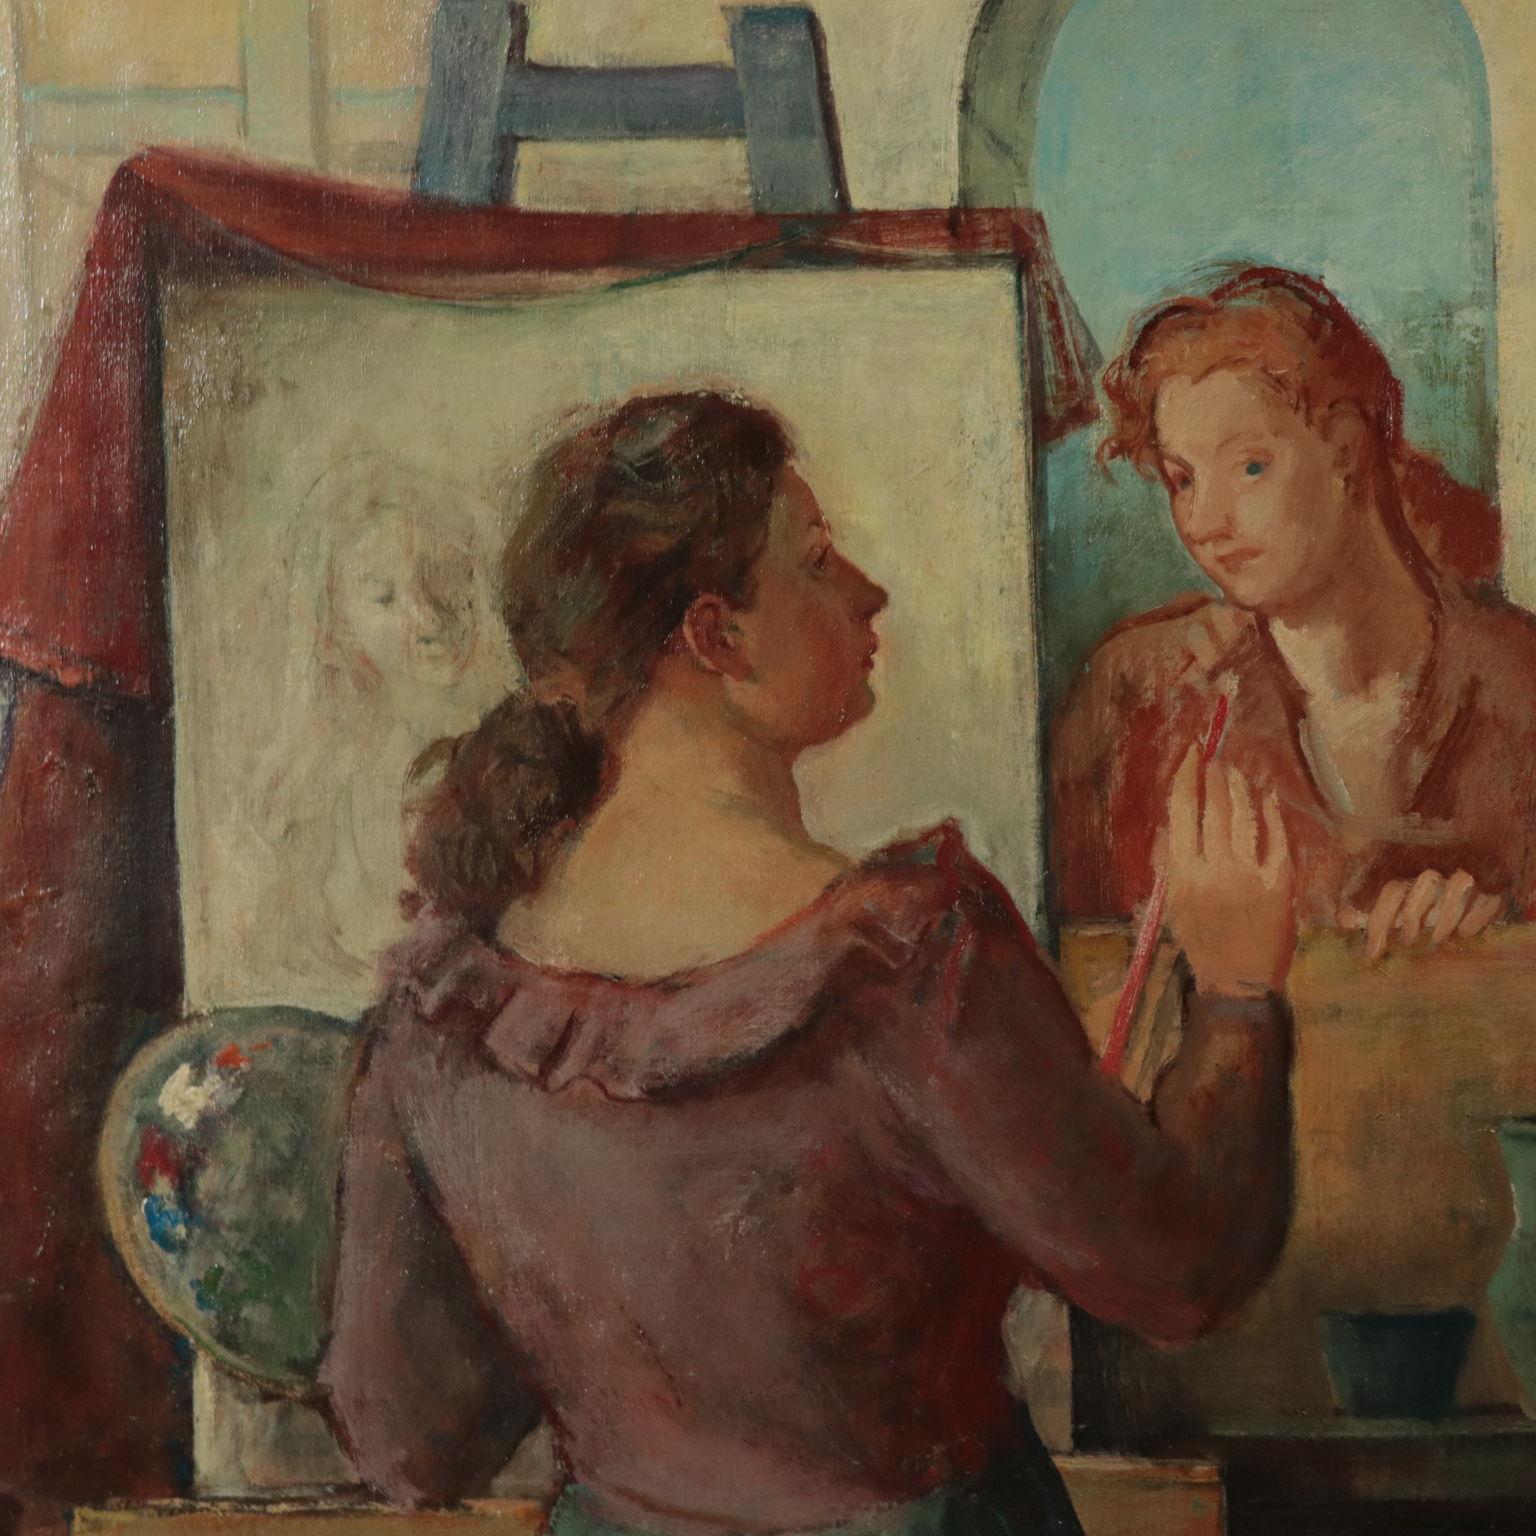 C. Barbieri Female Work Italy 1954 ca. - Other Art Style Painting by Contardo Barbieri